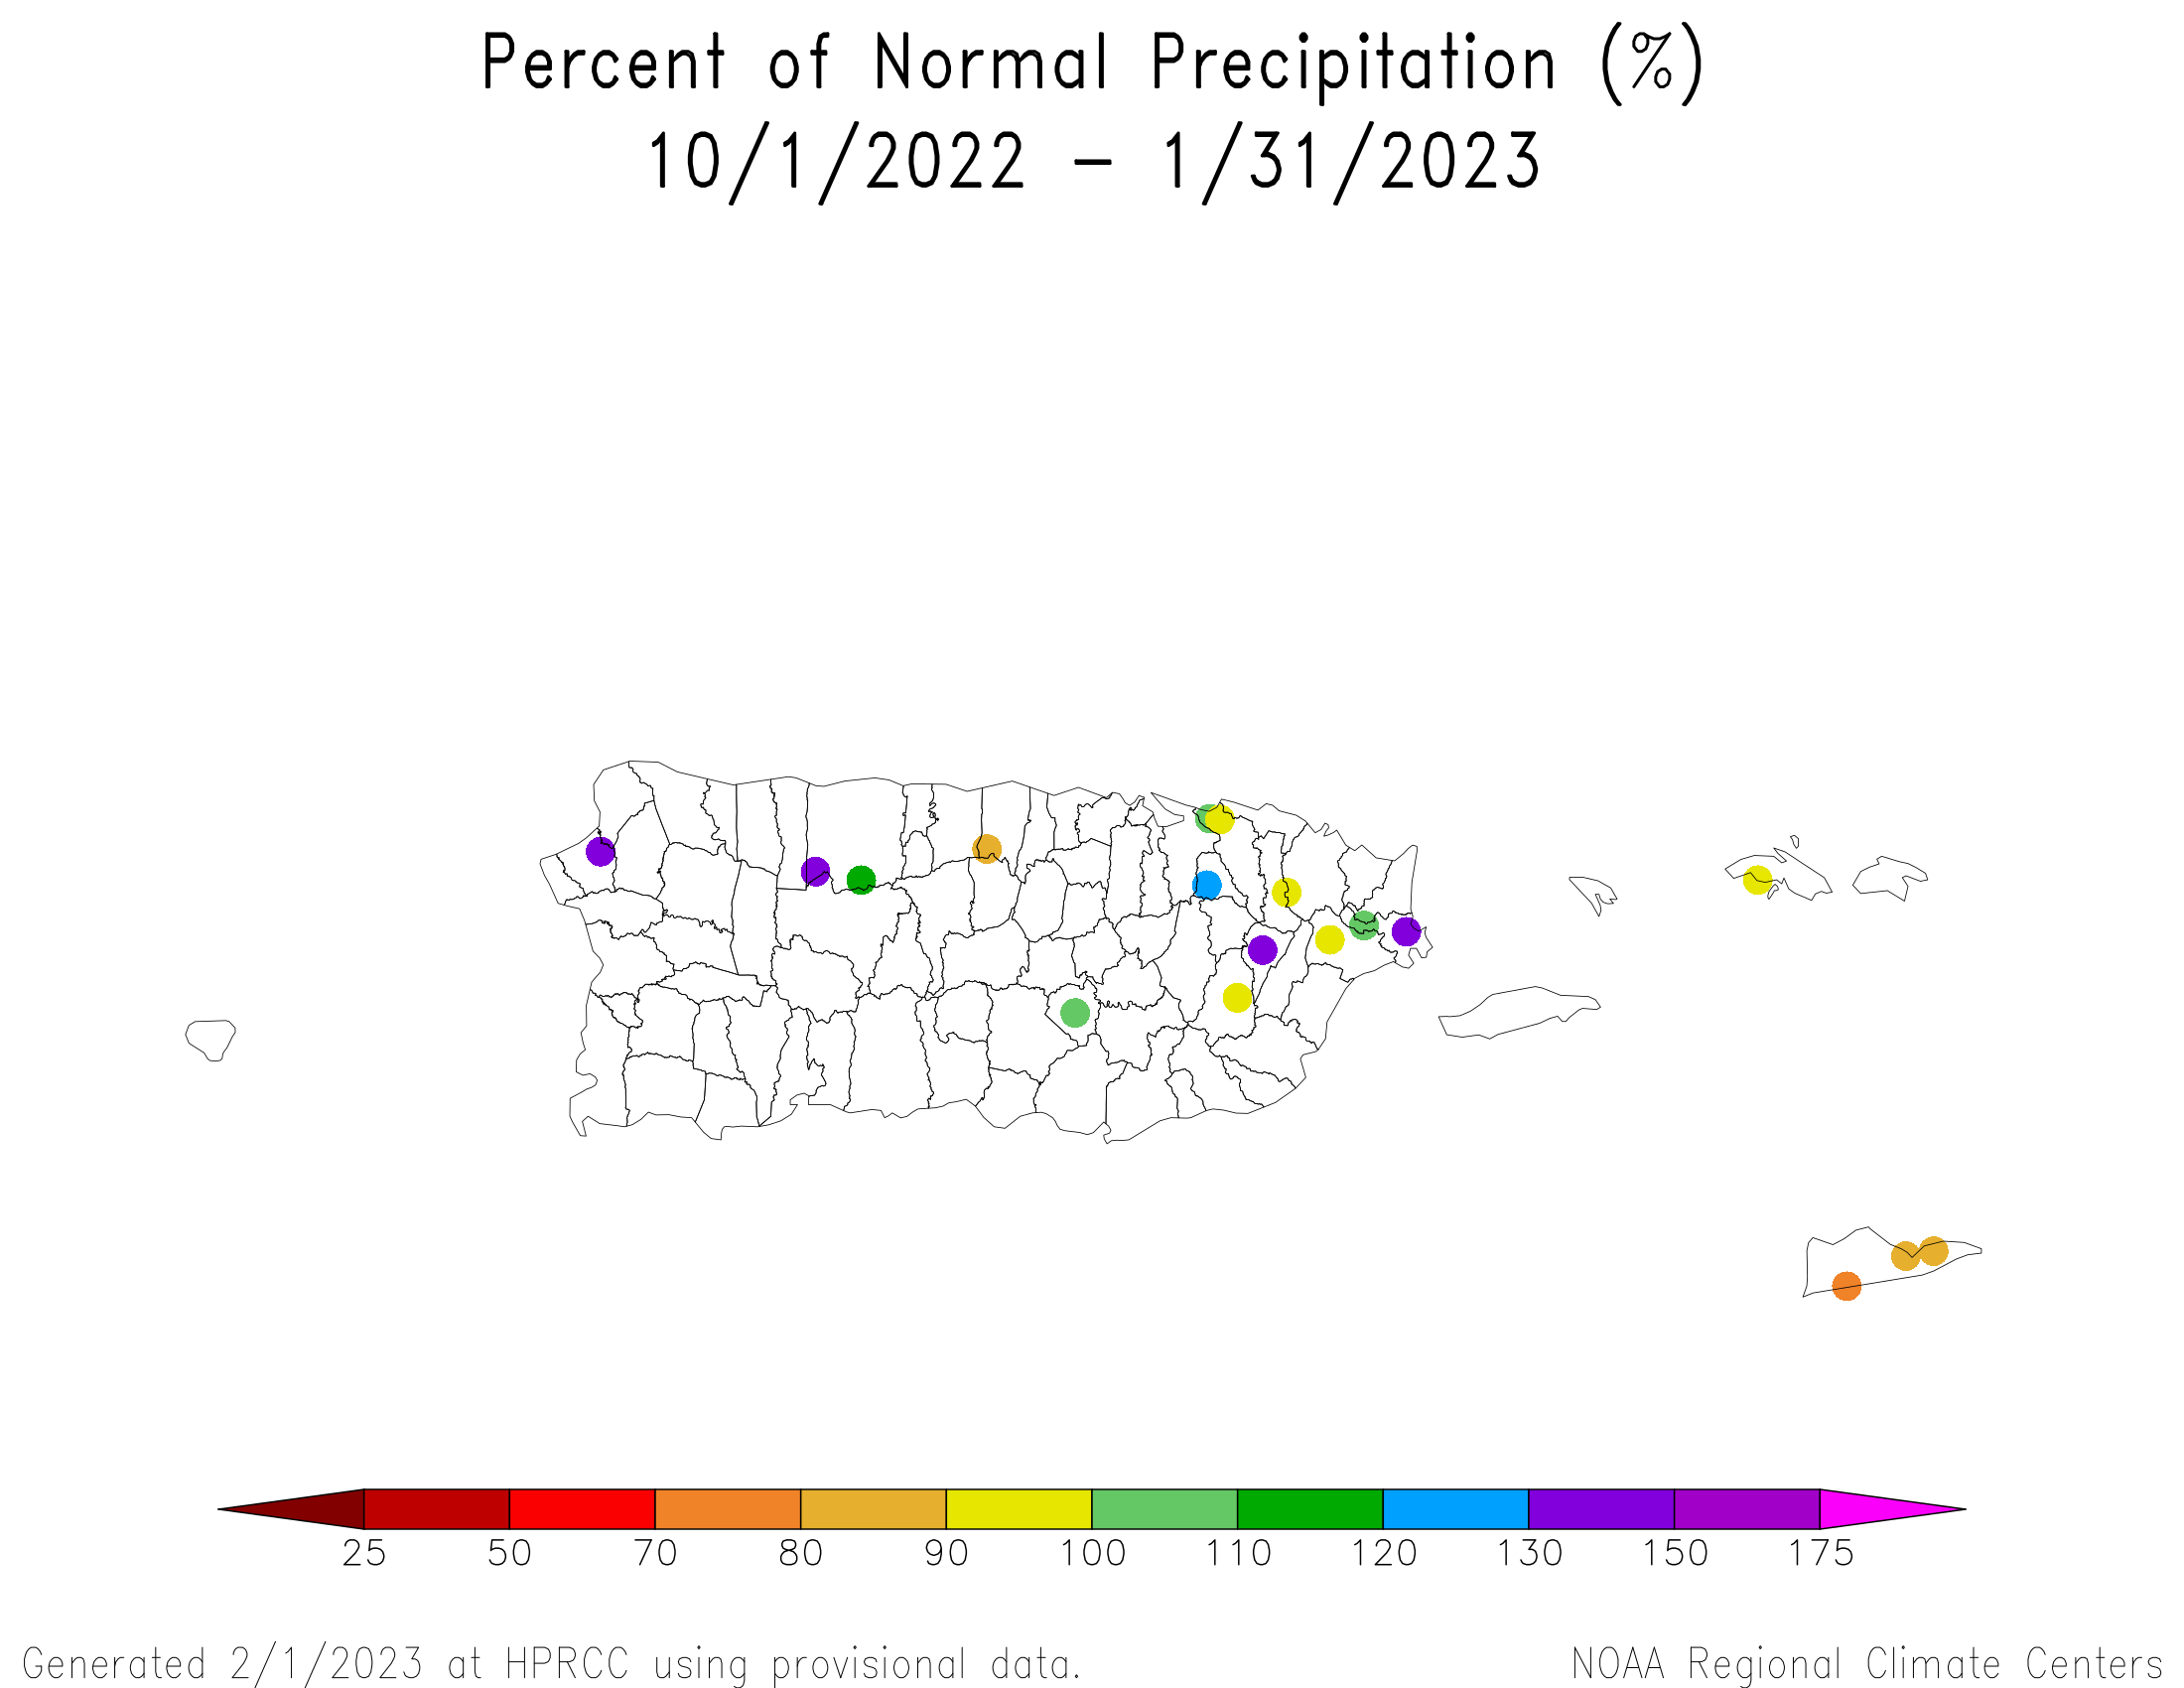 Puerto Rico and US Virgin Islands Percent of Normal Precipitation, October 2022-January 2023